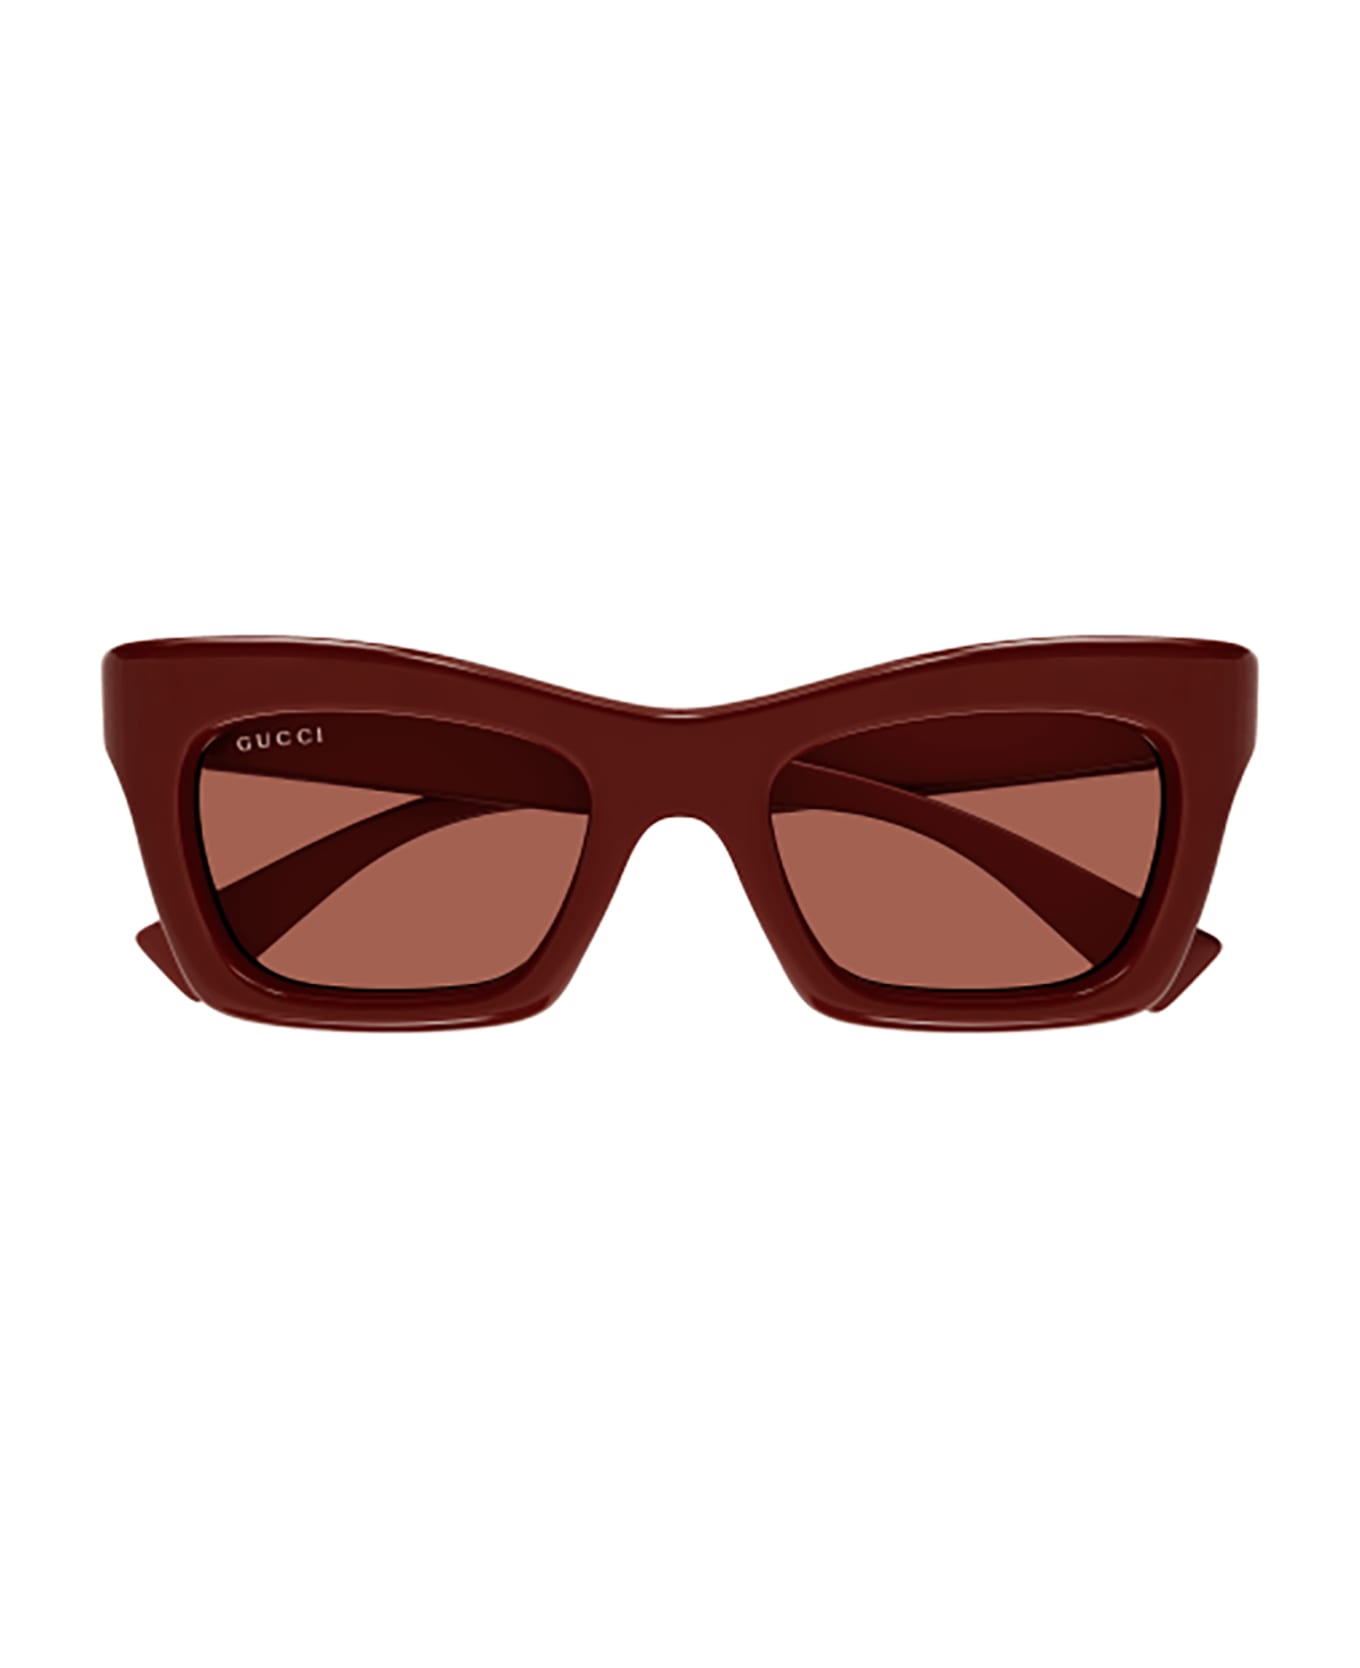 Gucci Eyewear GG1773S Sunglasses - Burgundy Burgundy Bro サングラス